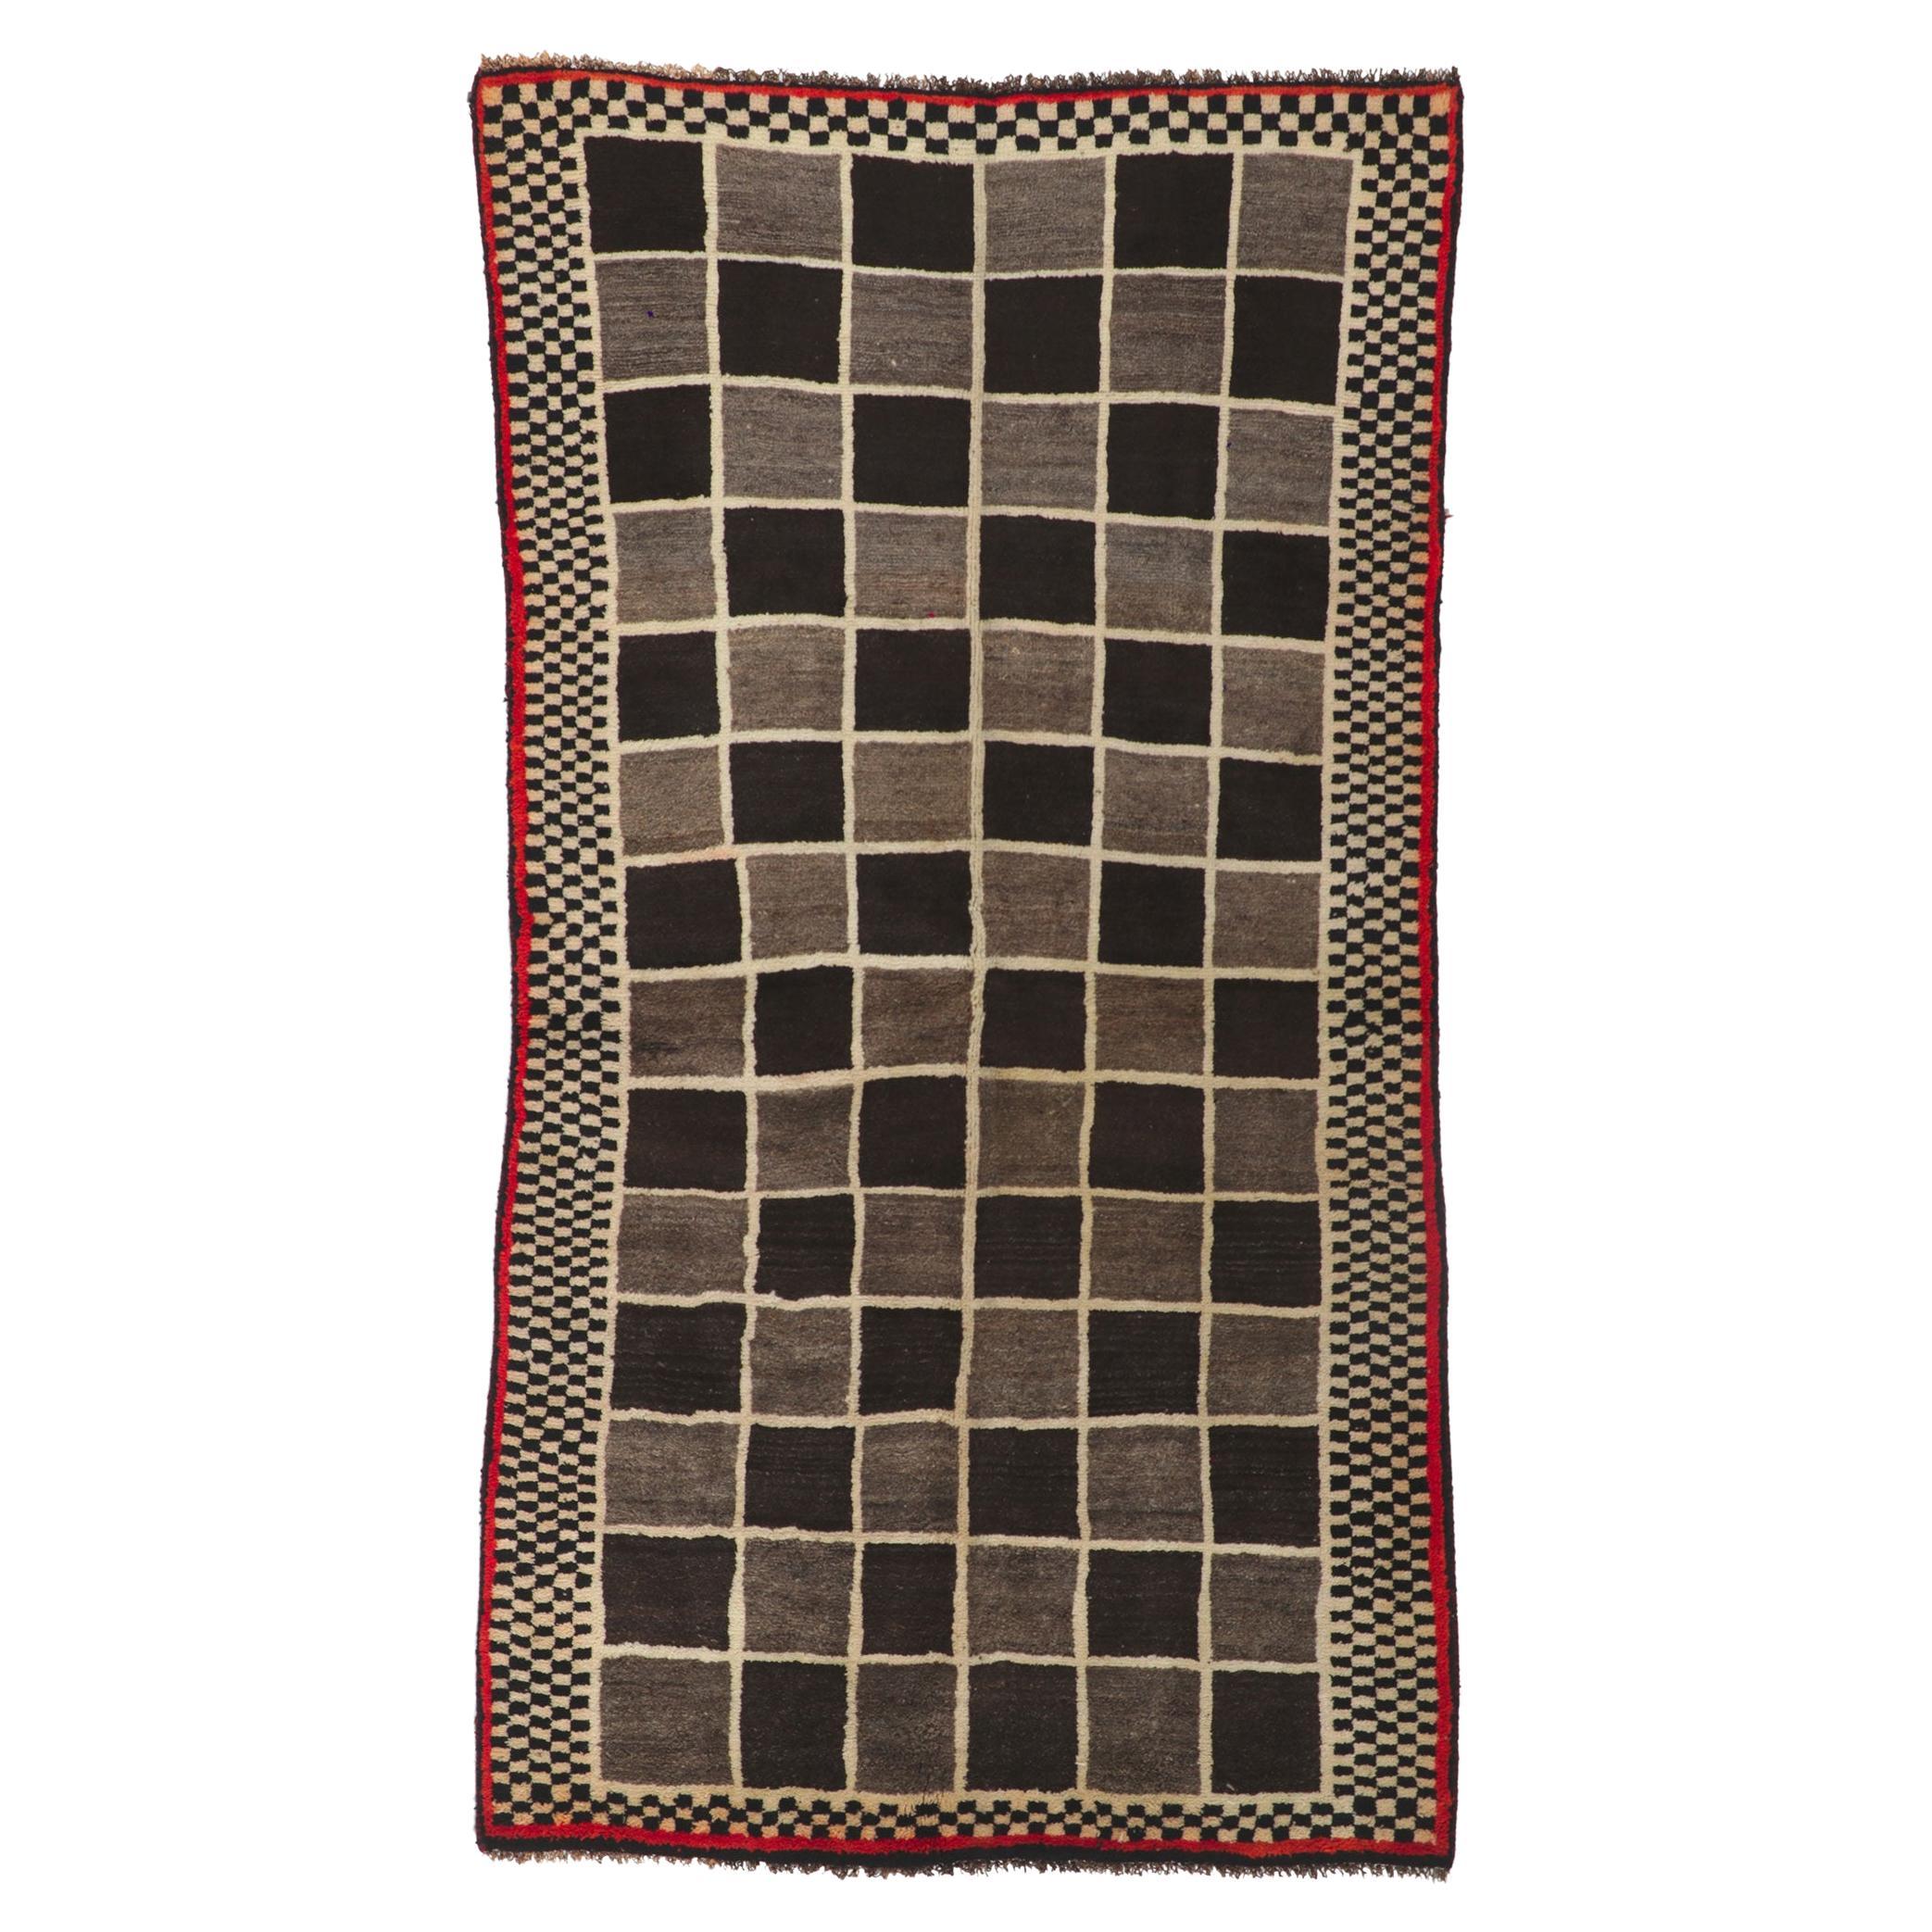 Vintage Persian Gabbeh Rug with Checkerboard Design